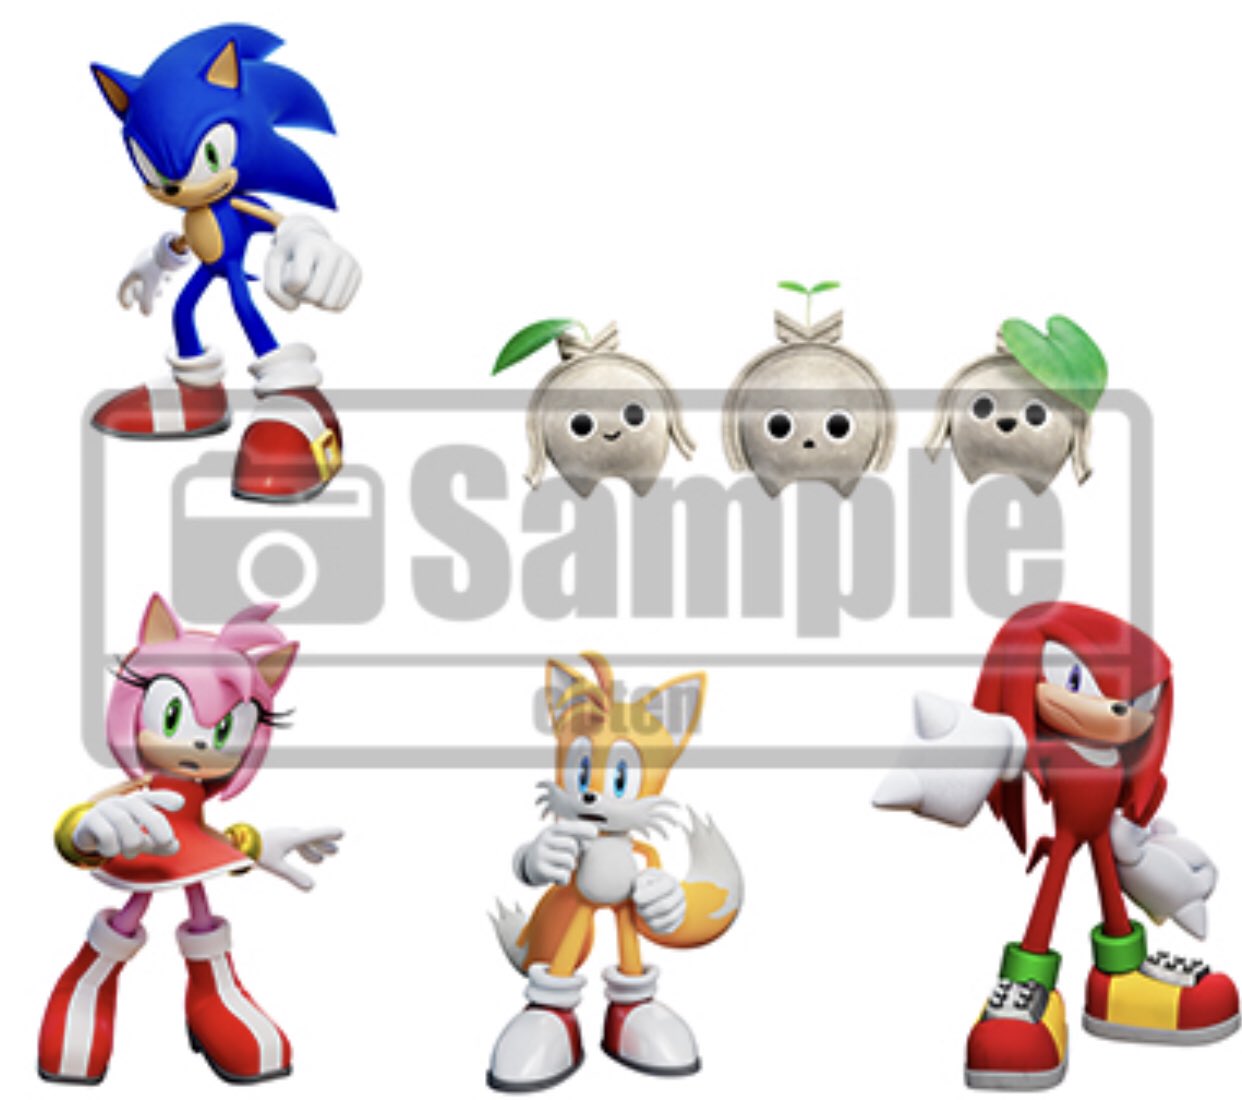 Sonic Frontiers – NintendoSoup